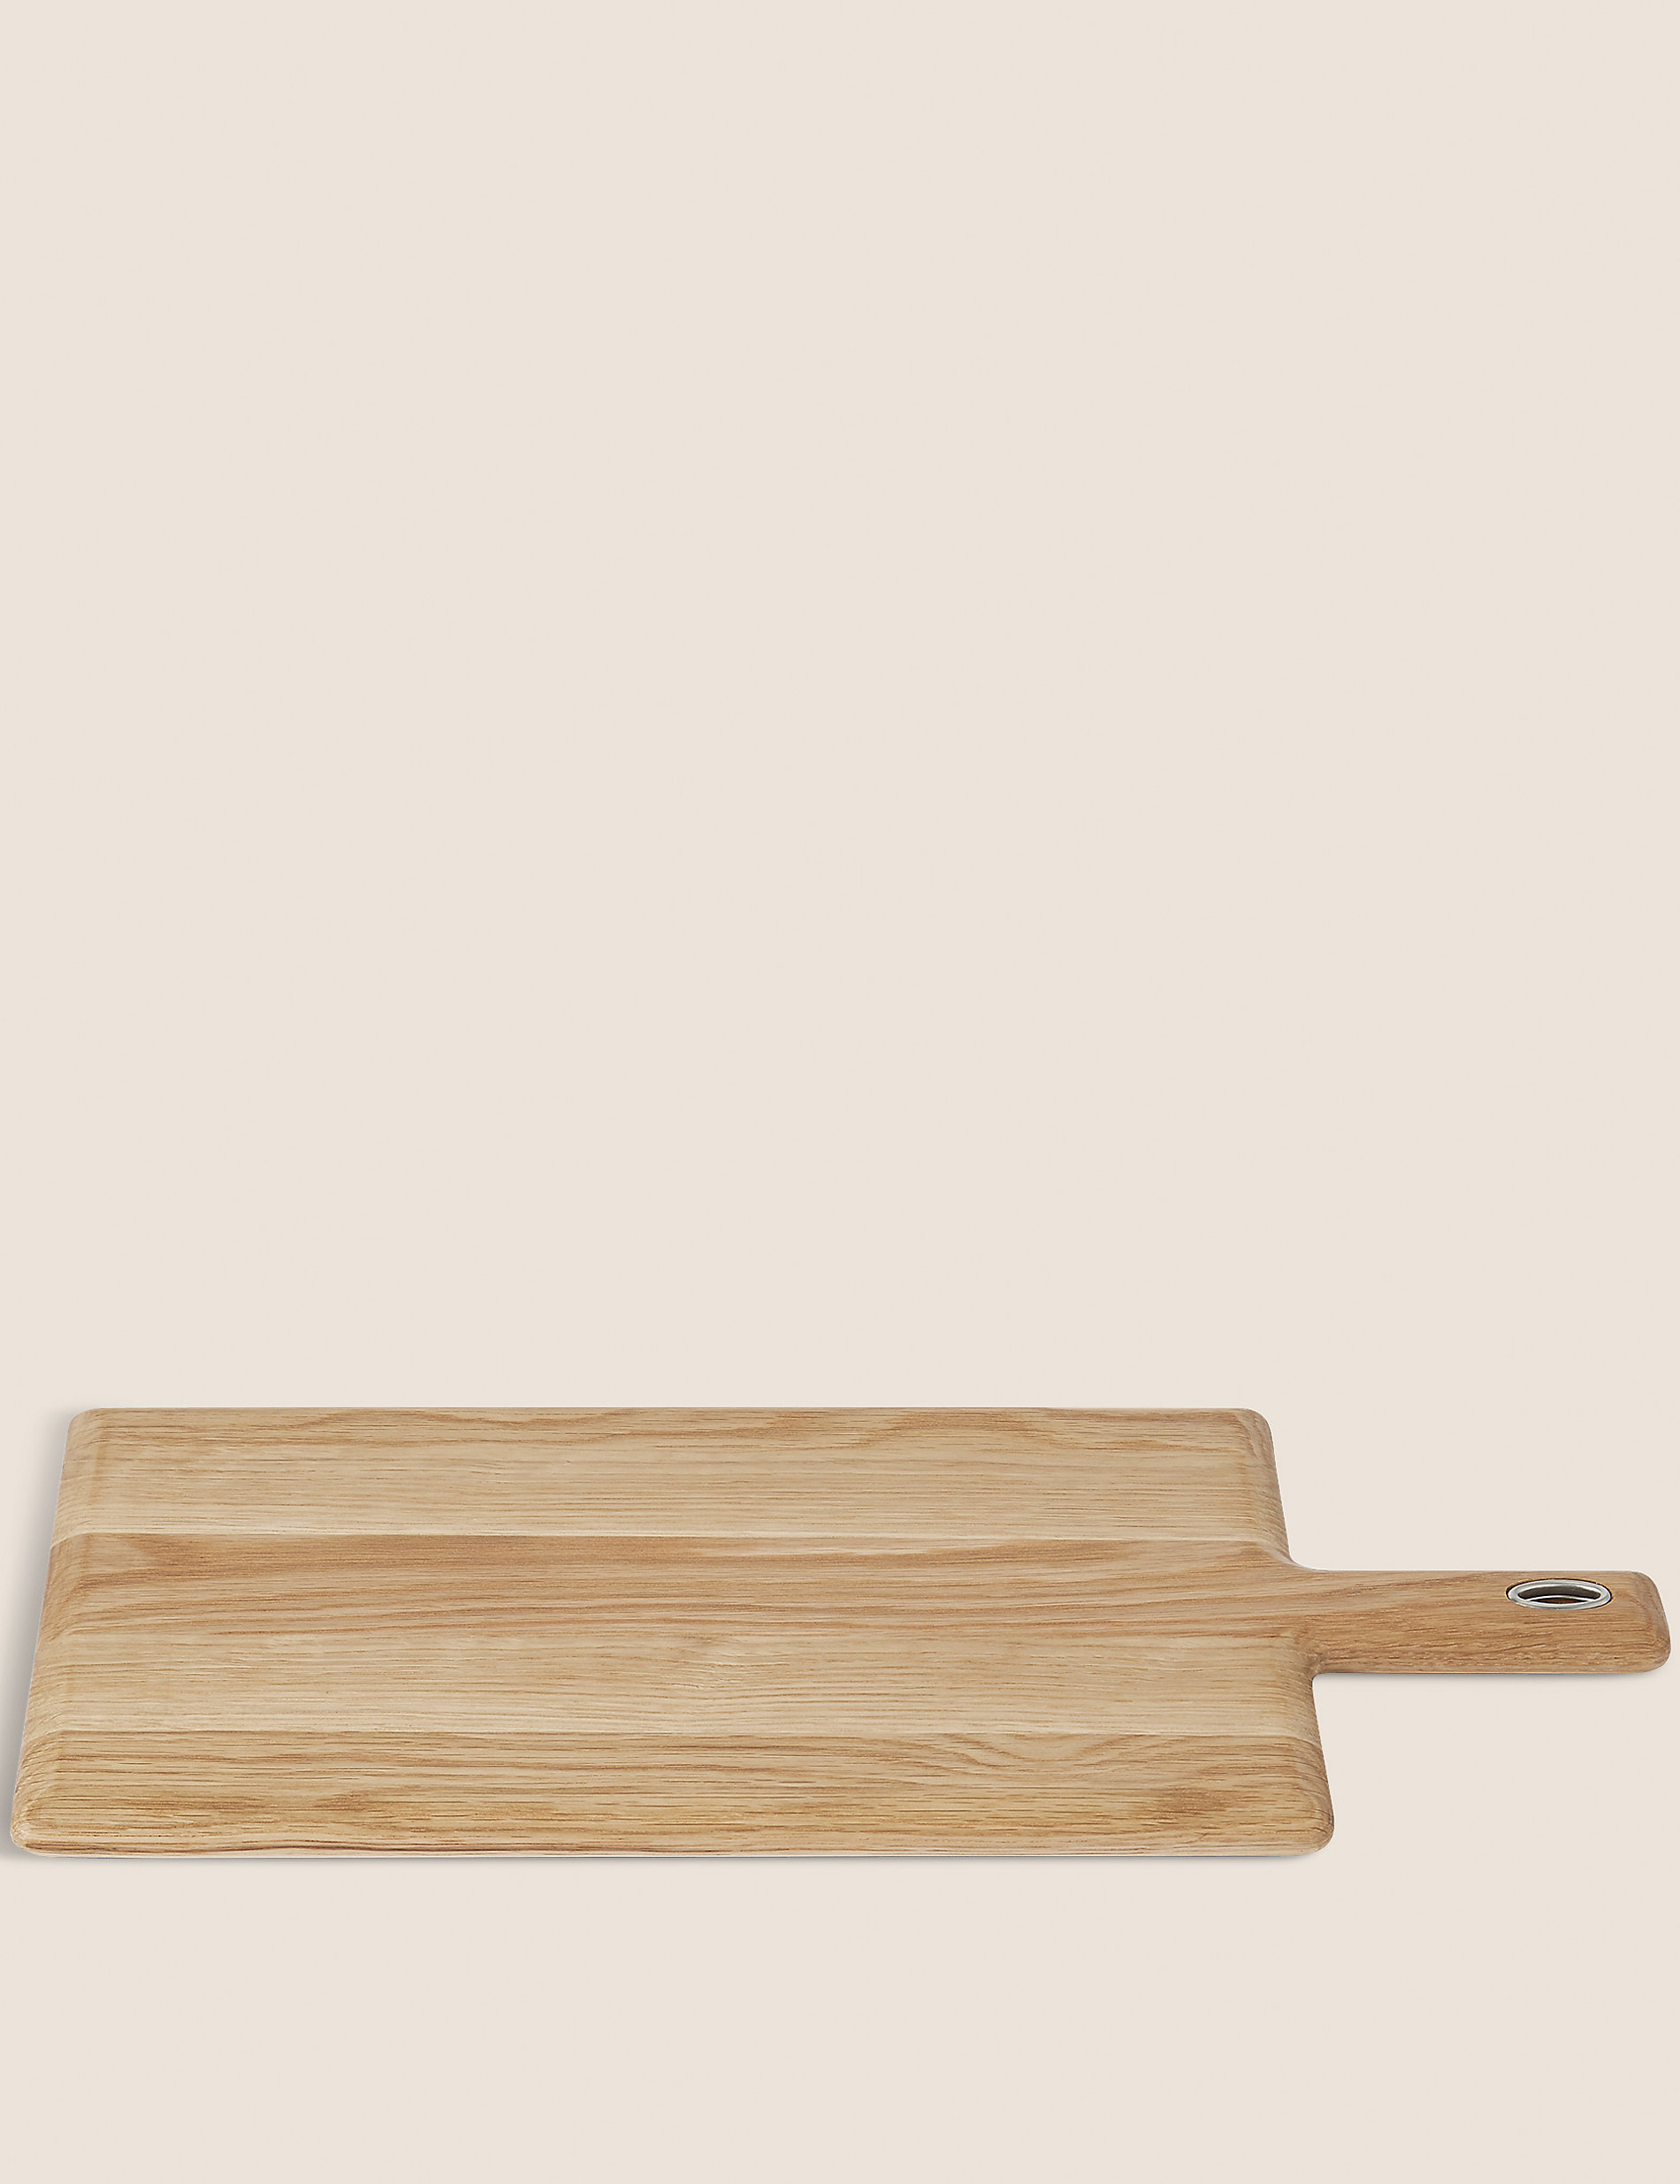 Large Oak Chopping Board